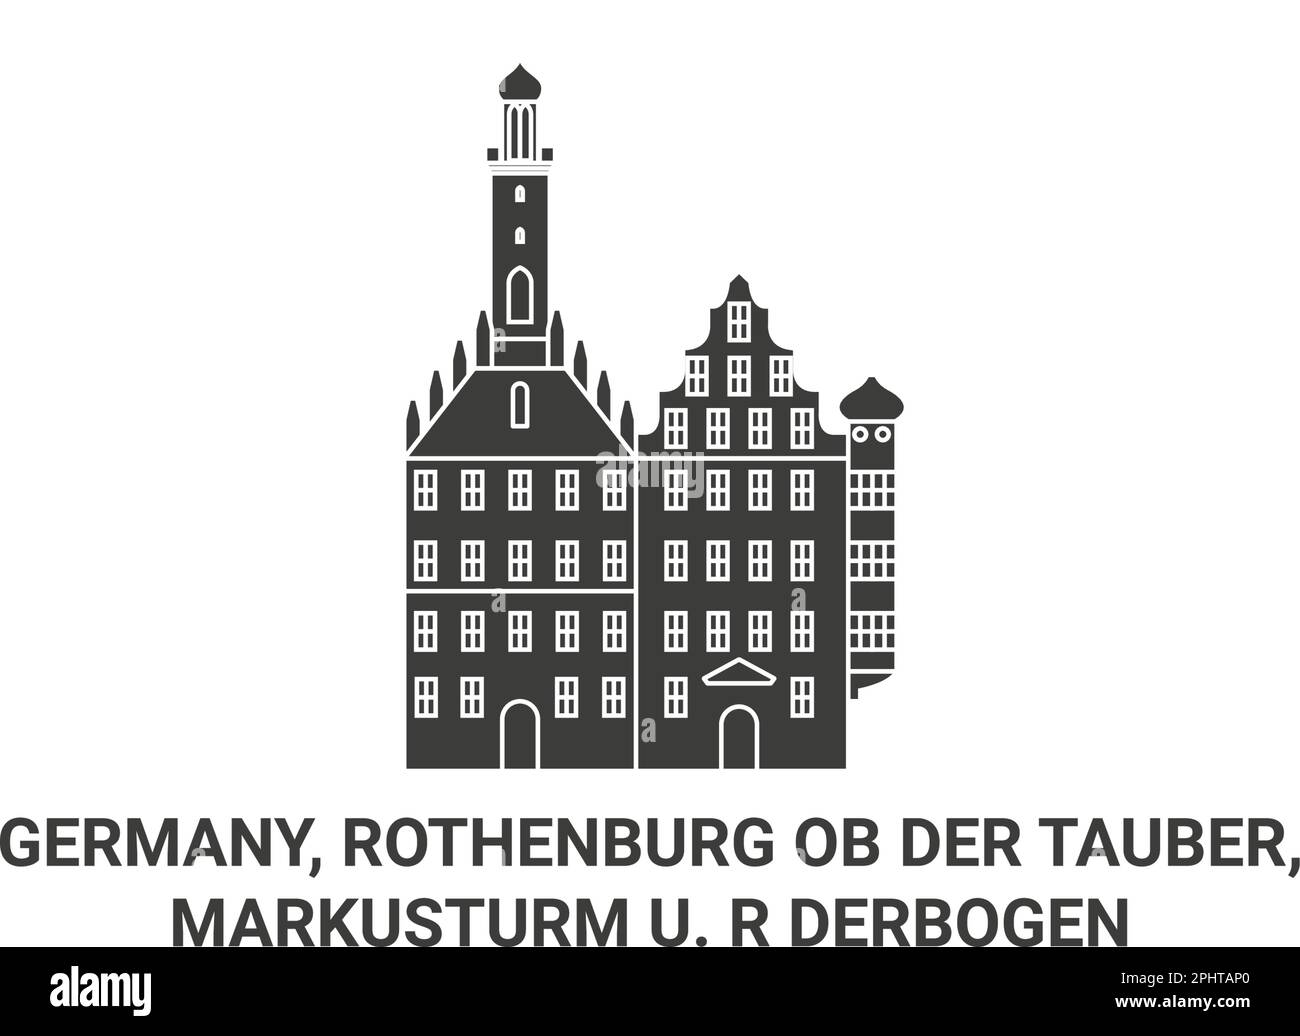 Deutschland, Rothenburg ob der Tauber, Markusturm U. Rderbogen travel Landmark Vector Illustration Stock Vektor